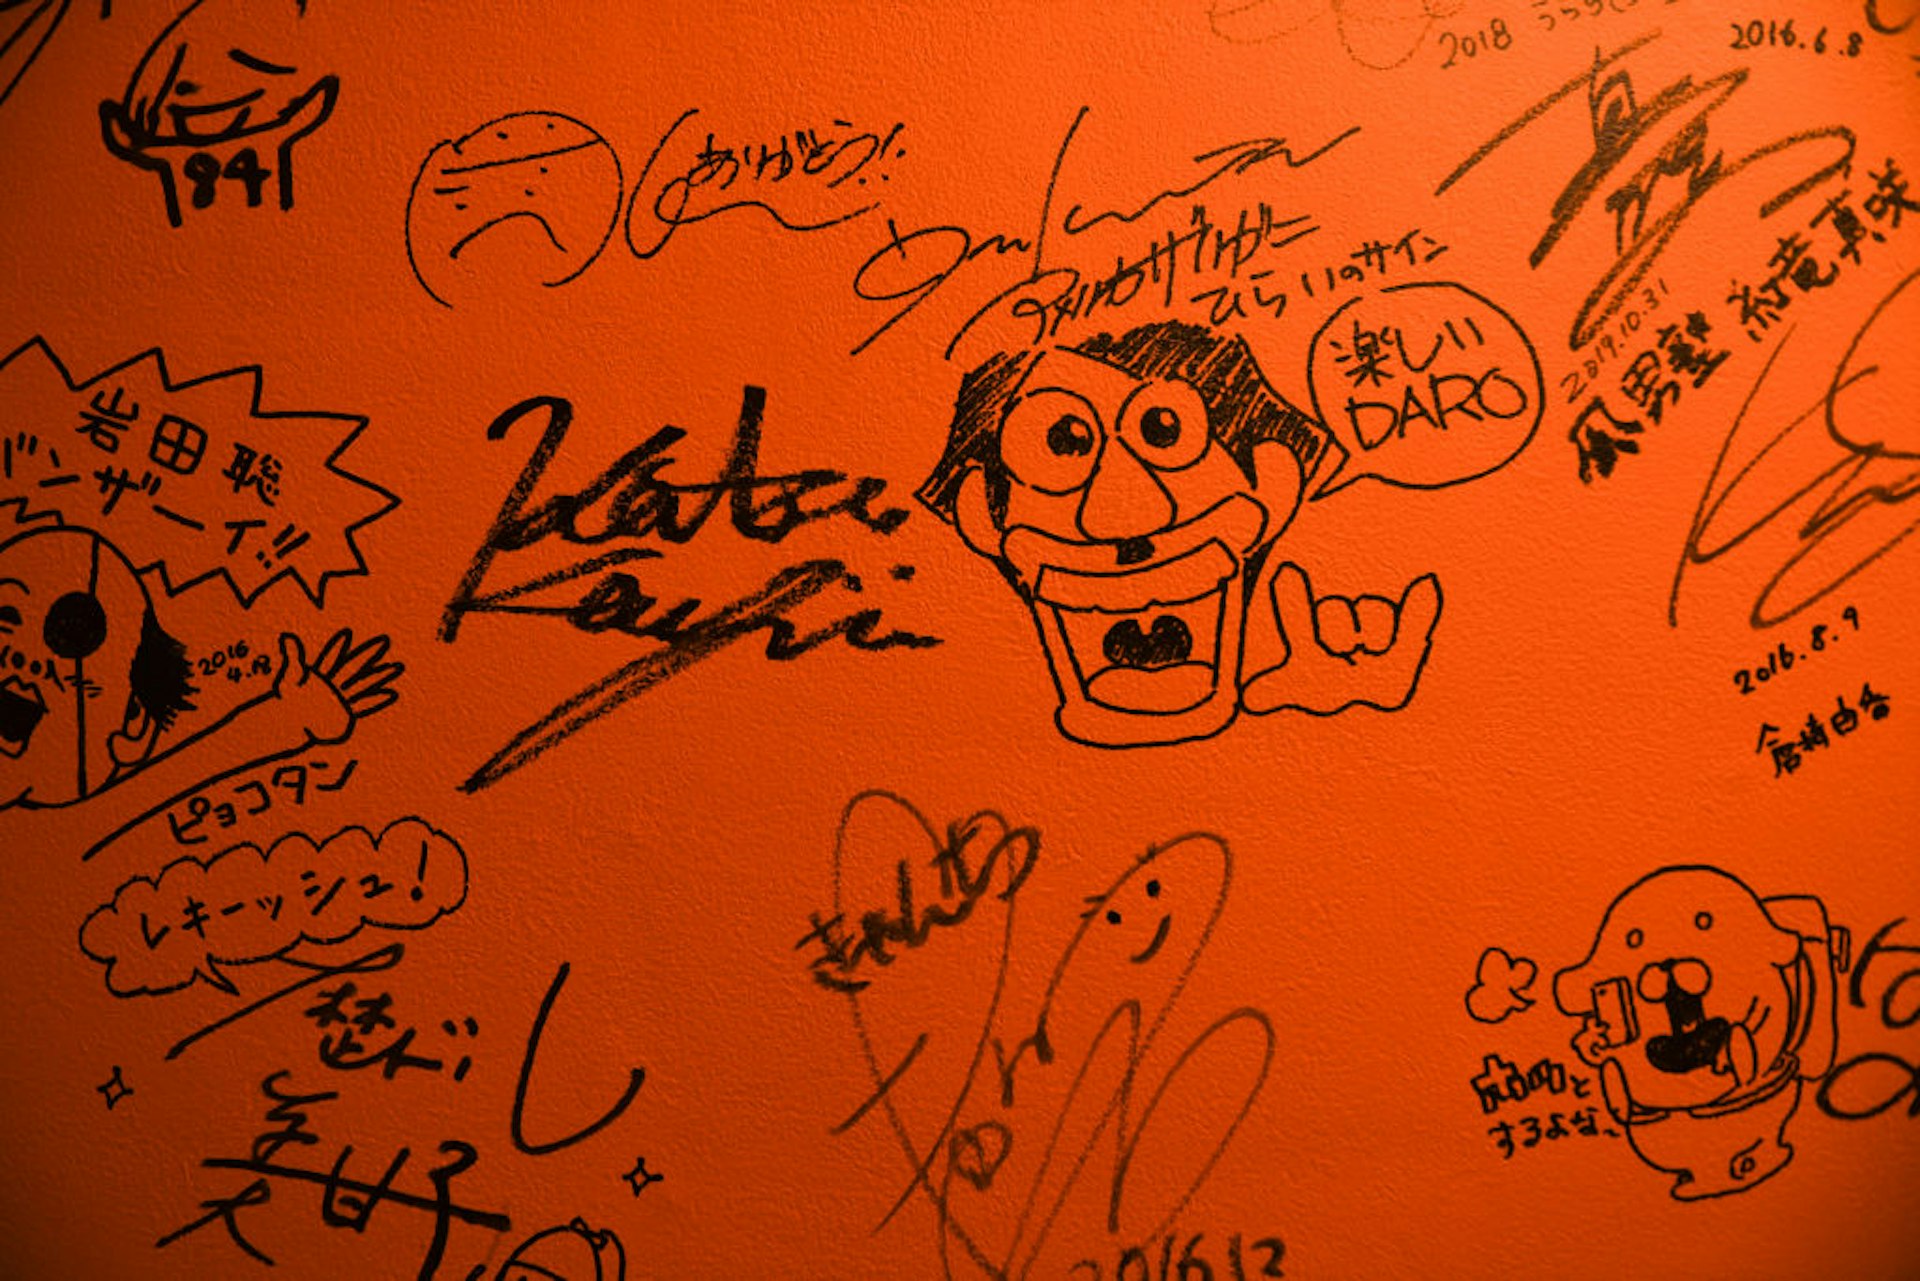 Autographs signed on a bathroom wall inside 84